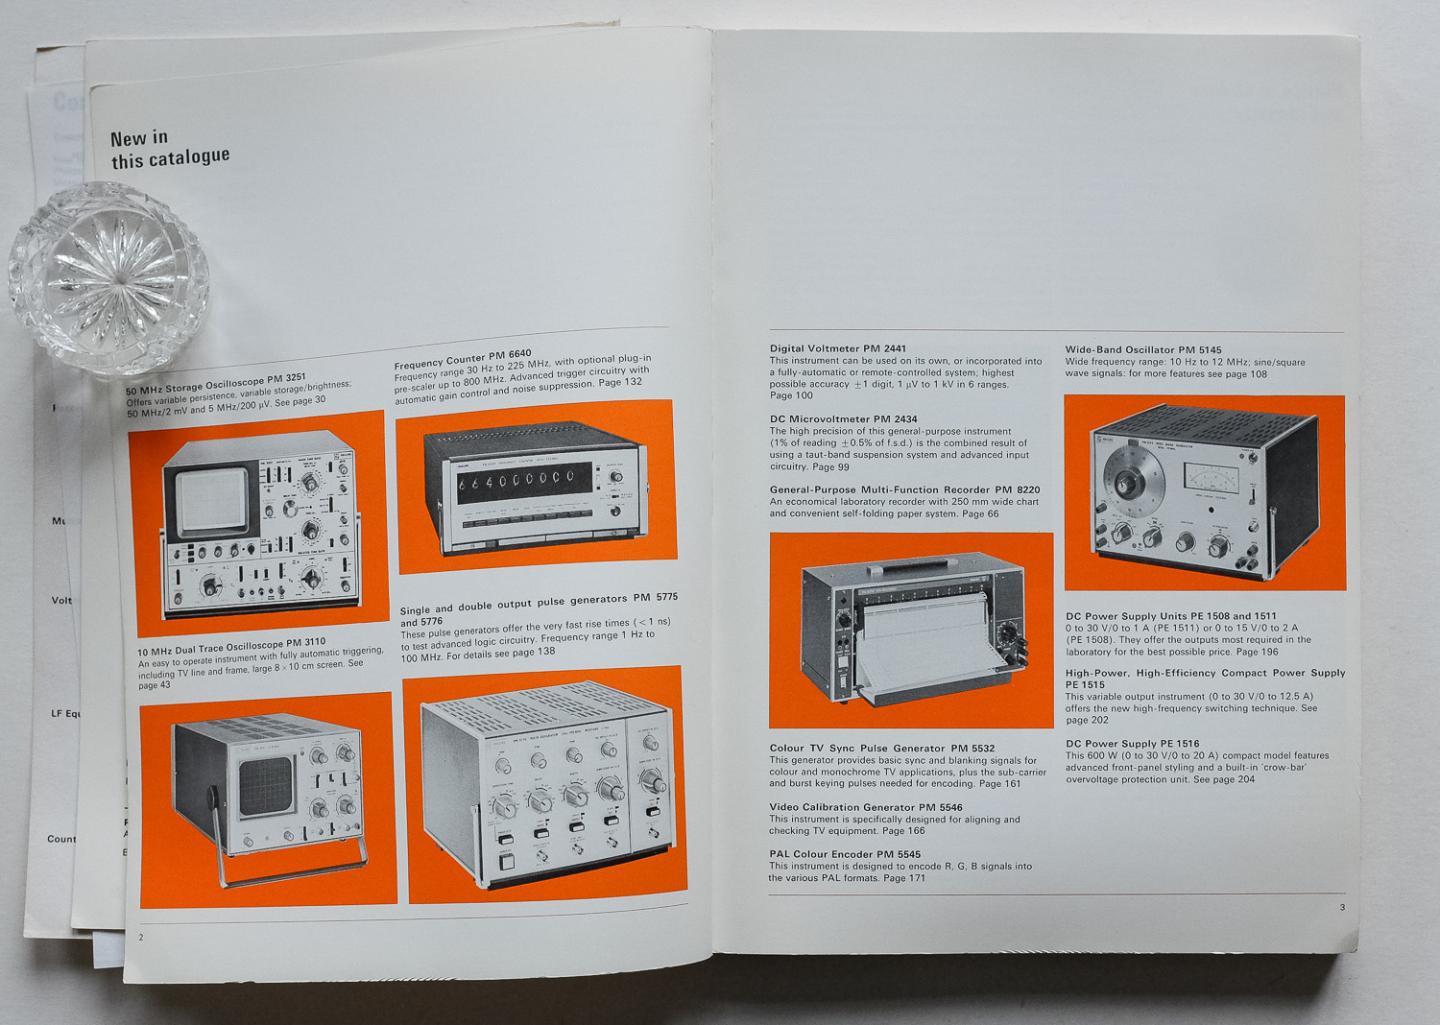 Philips Gloeilampenfabrieken Nederland n.v., Eindhoven - Test and measuring instruments - catalog 1972